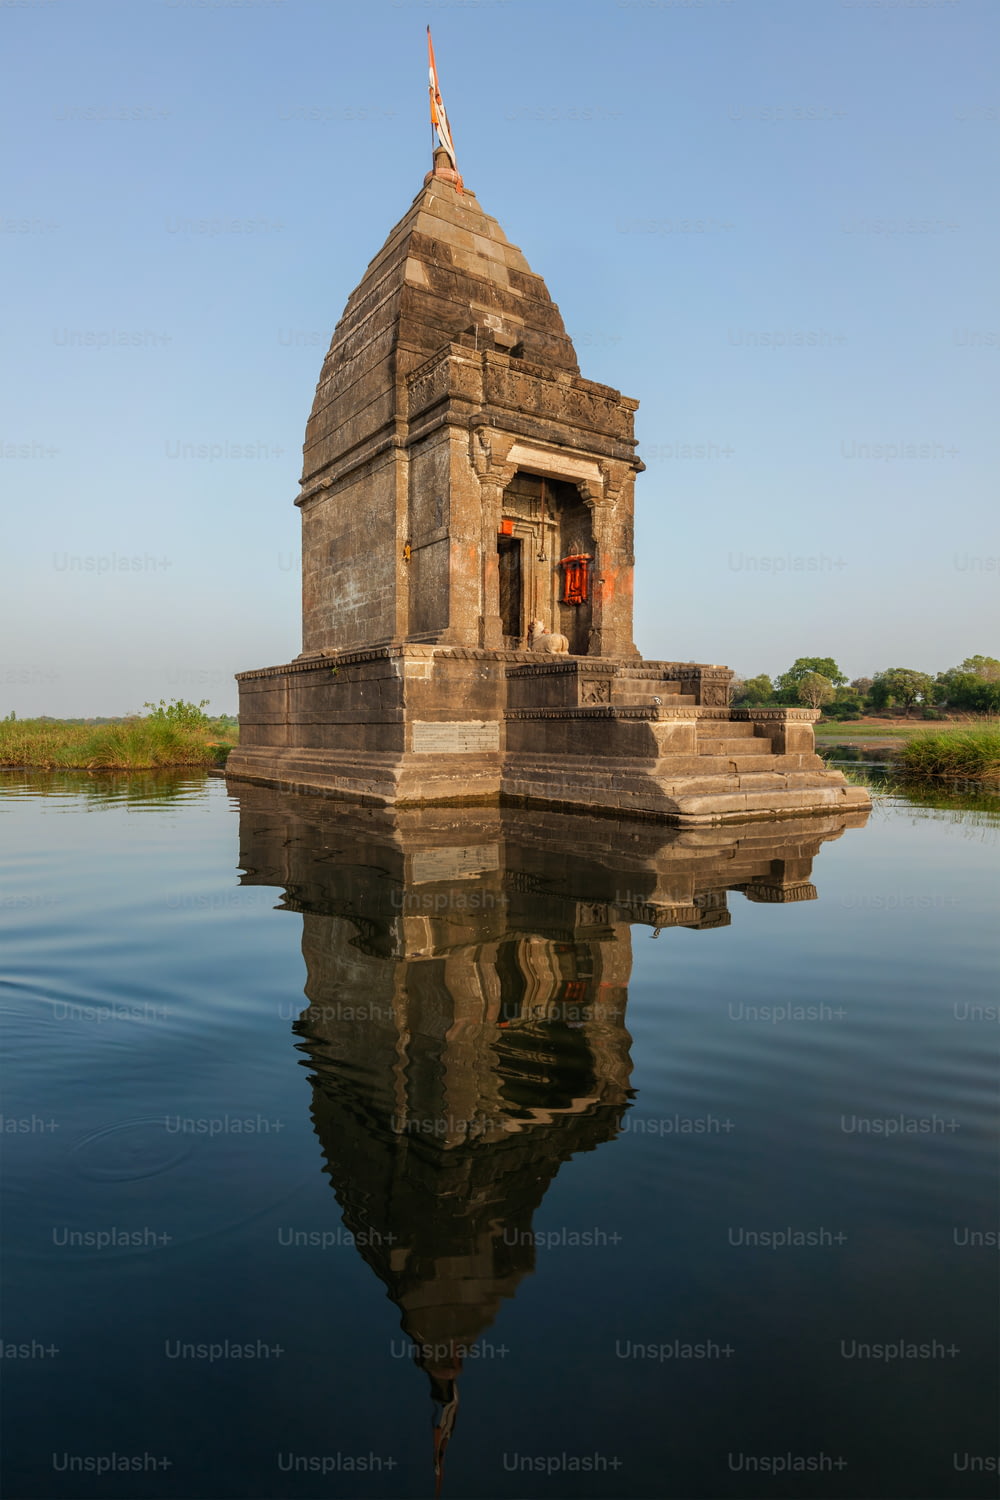 Baneswar temple (Small Hindu temple dedicated to Shiva) in the middle of the holy Narmada River, Maheshwar, Madhya Pradesh state, India